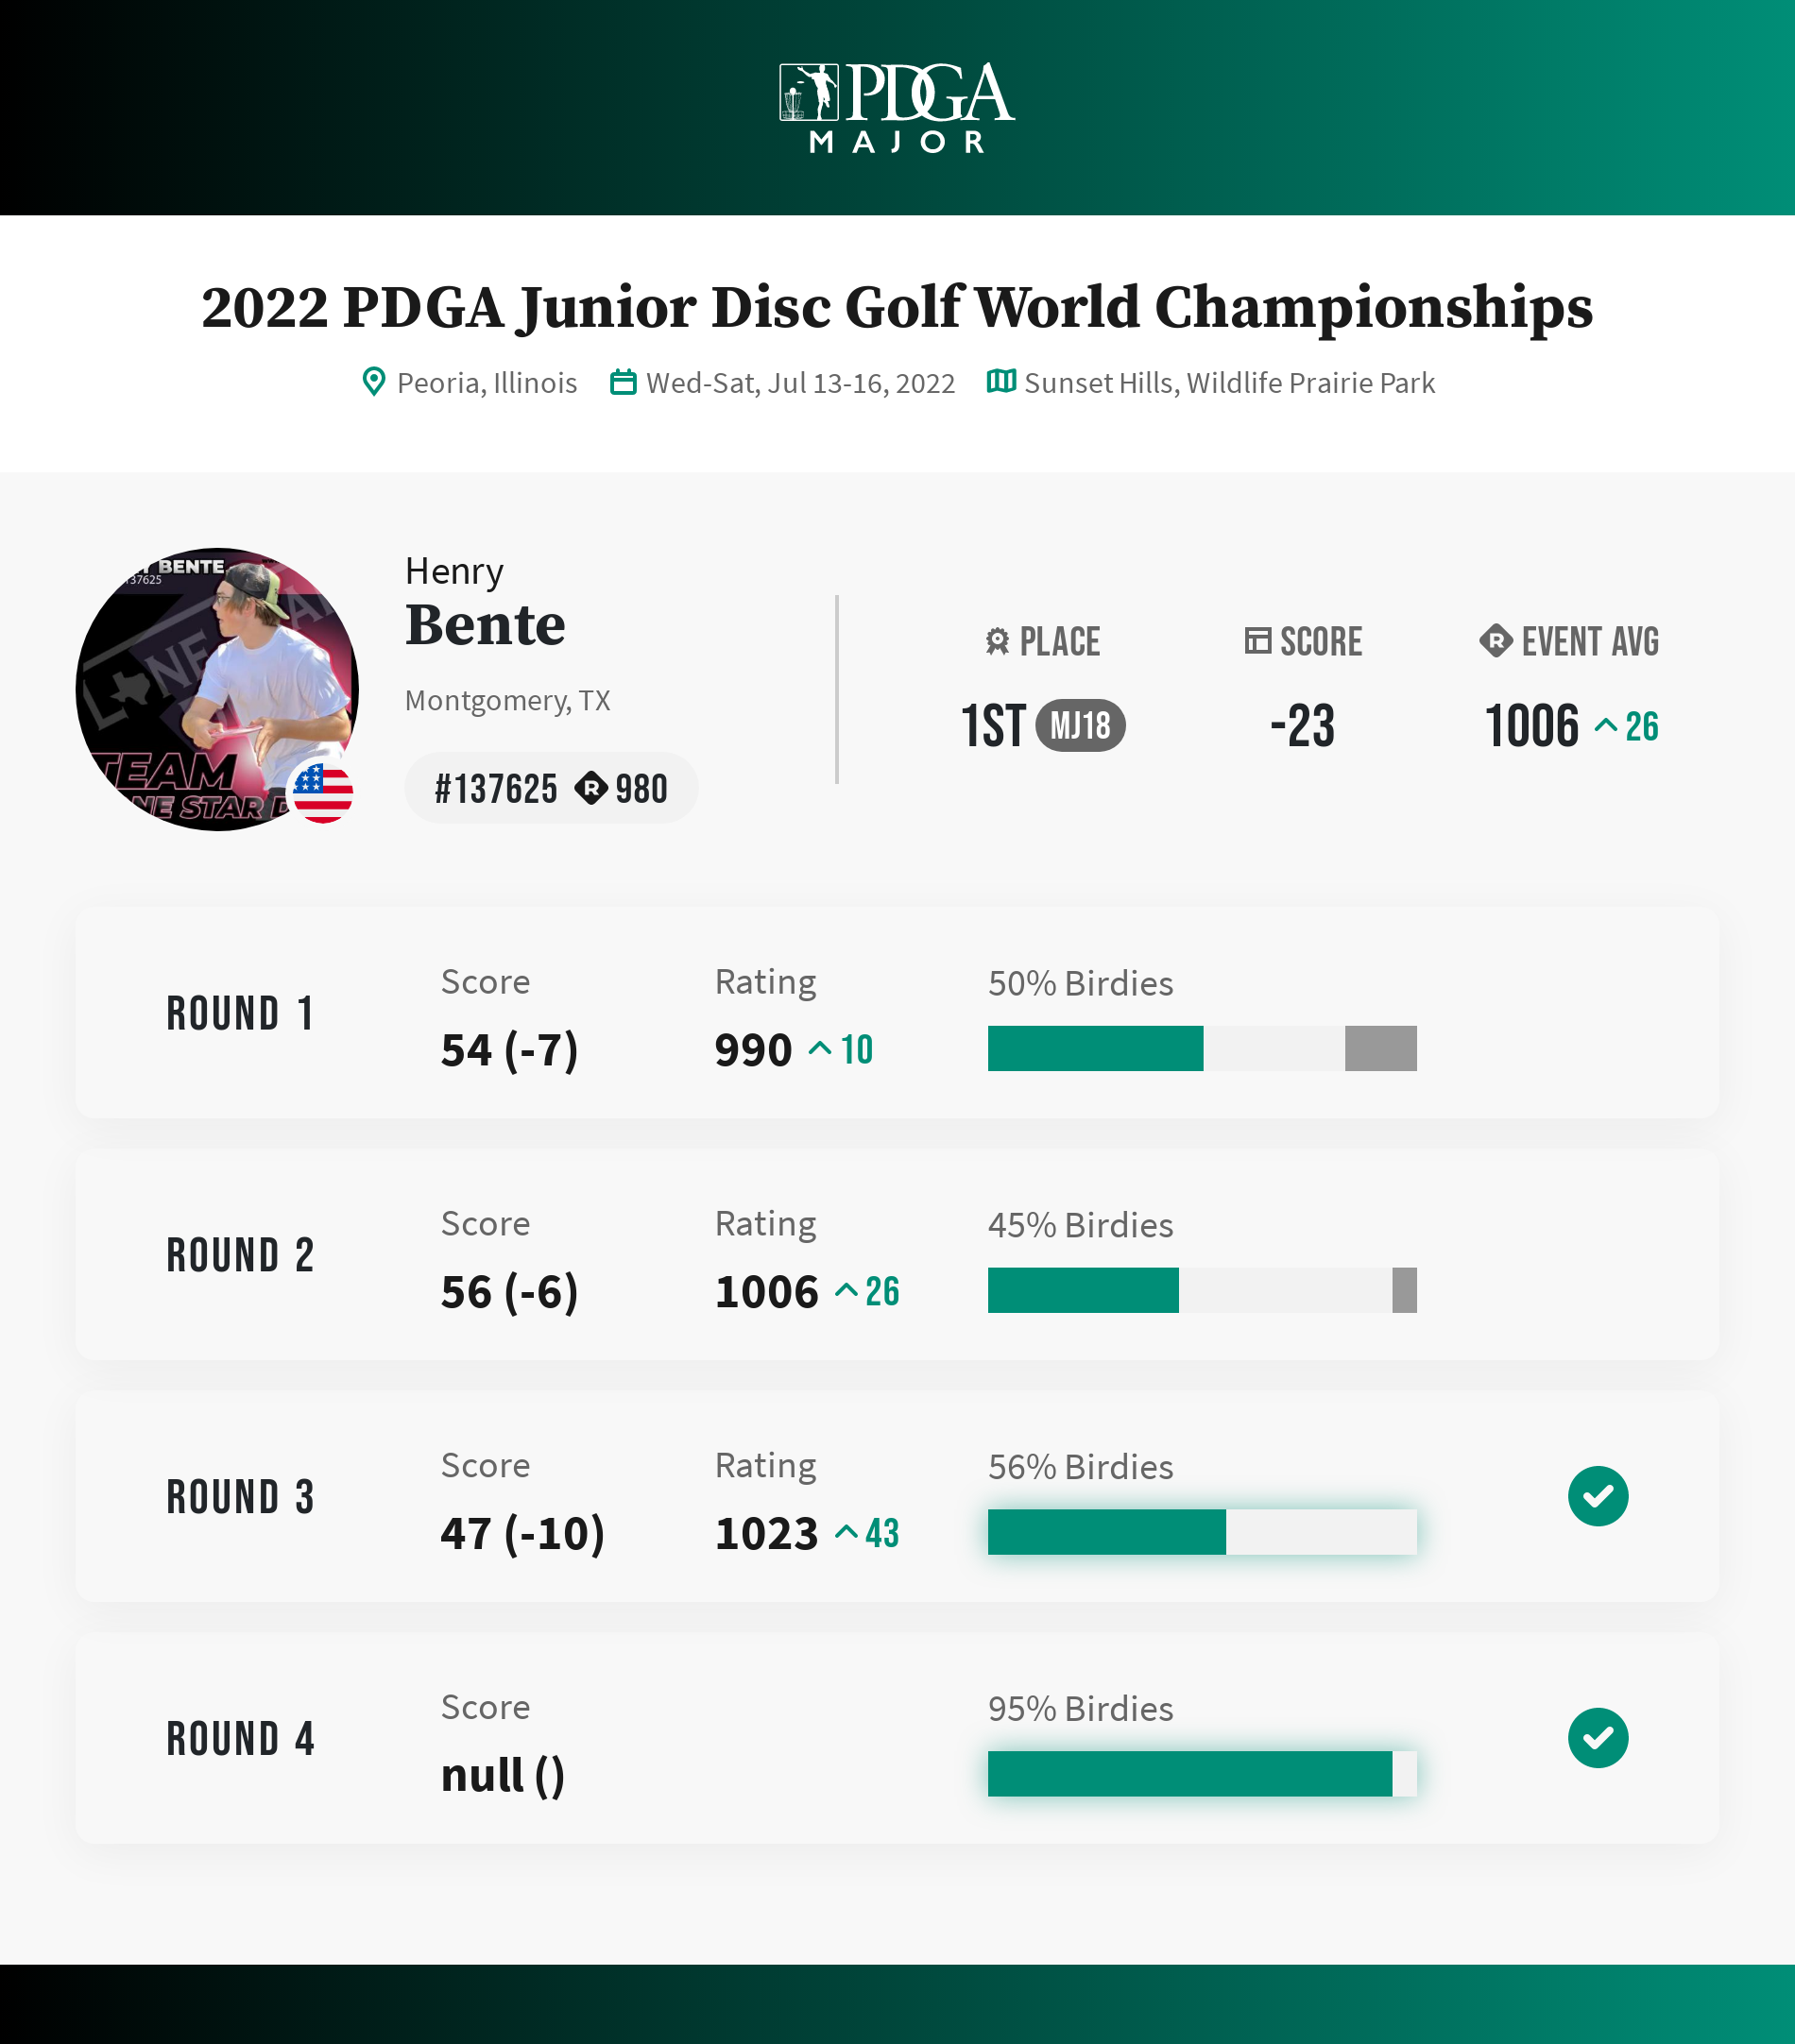 henry-bente-2022-pdga-junior-disc-golf-world-championships-2022-summary.png